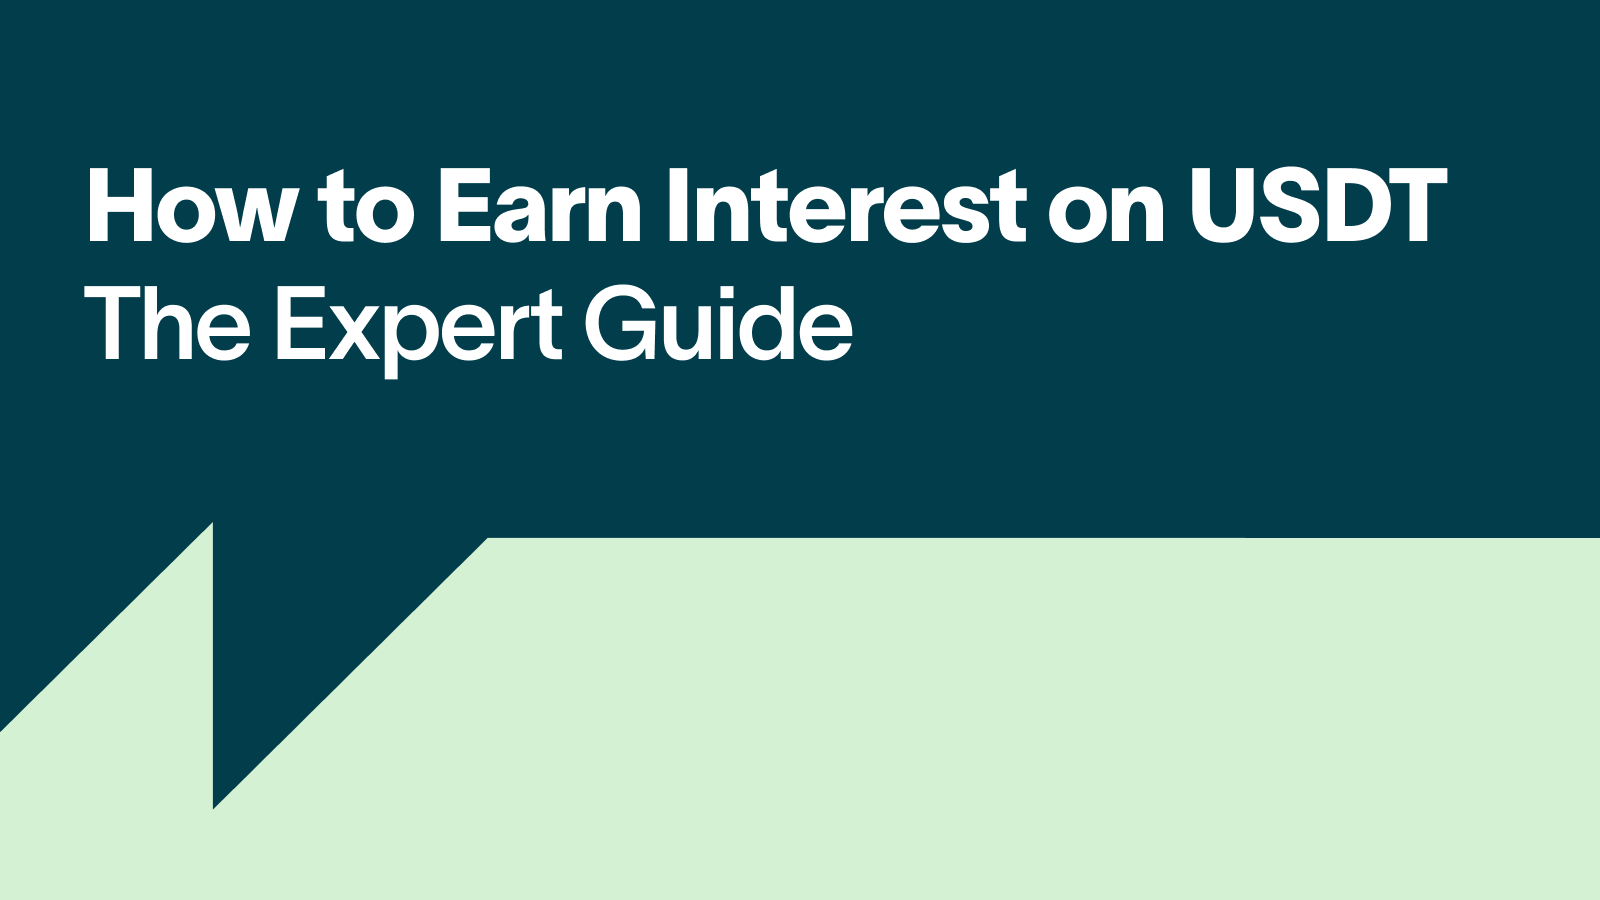 How to Earn Interest on USDT The Expert Guide (1)